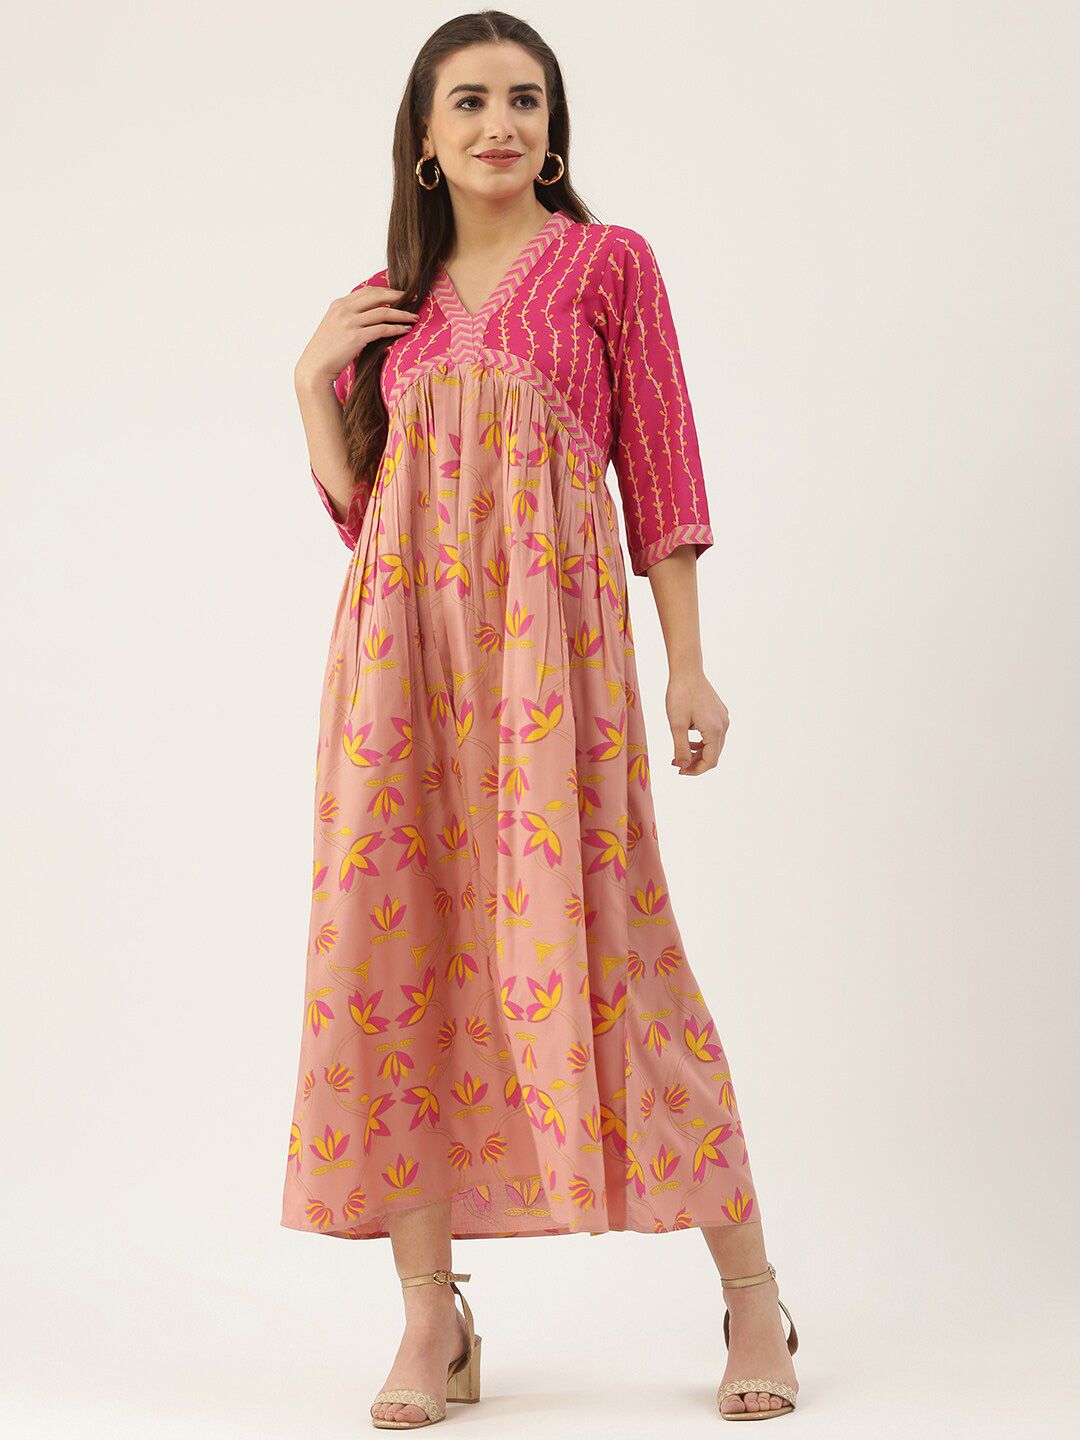 Rustorange Pink Floral A-Line Dress Price in India